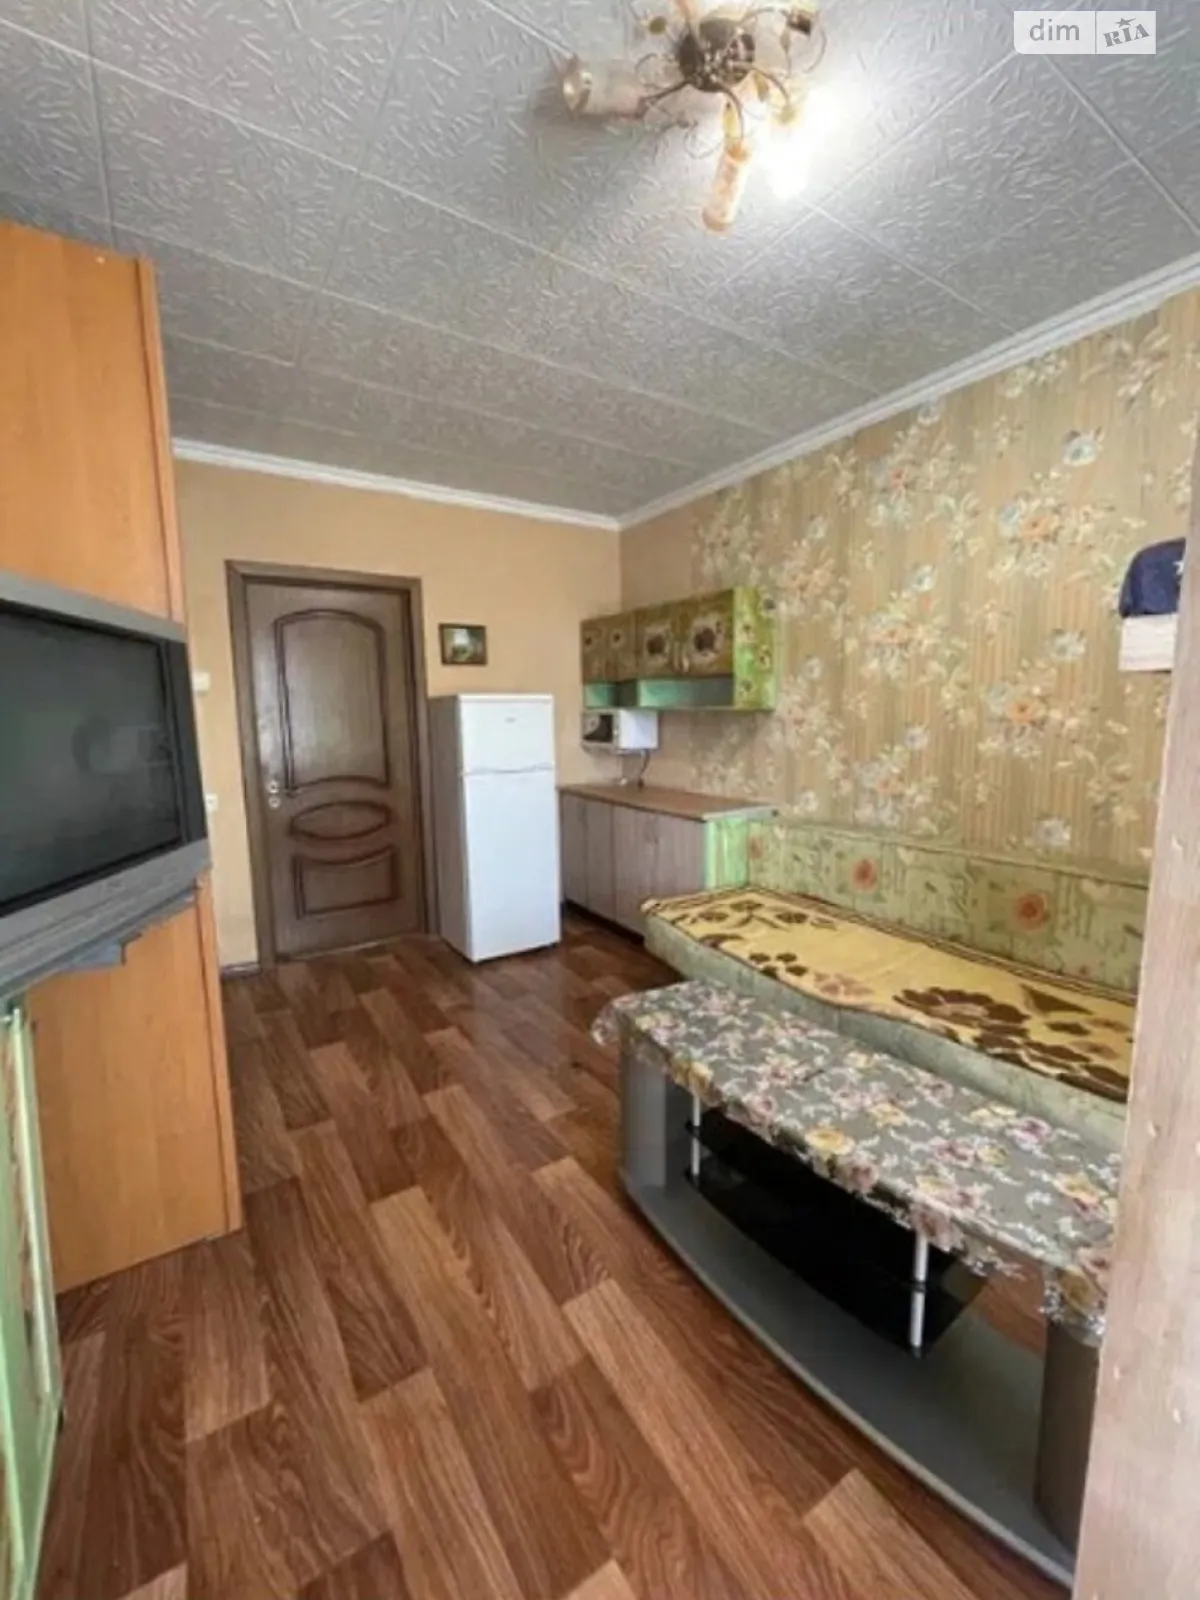 Продается комната 18 кв. м в Одессе, цена: 8500 $ - фото 1